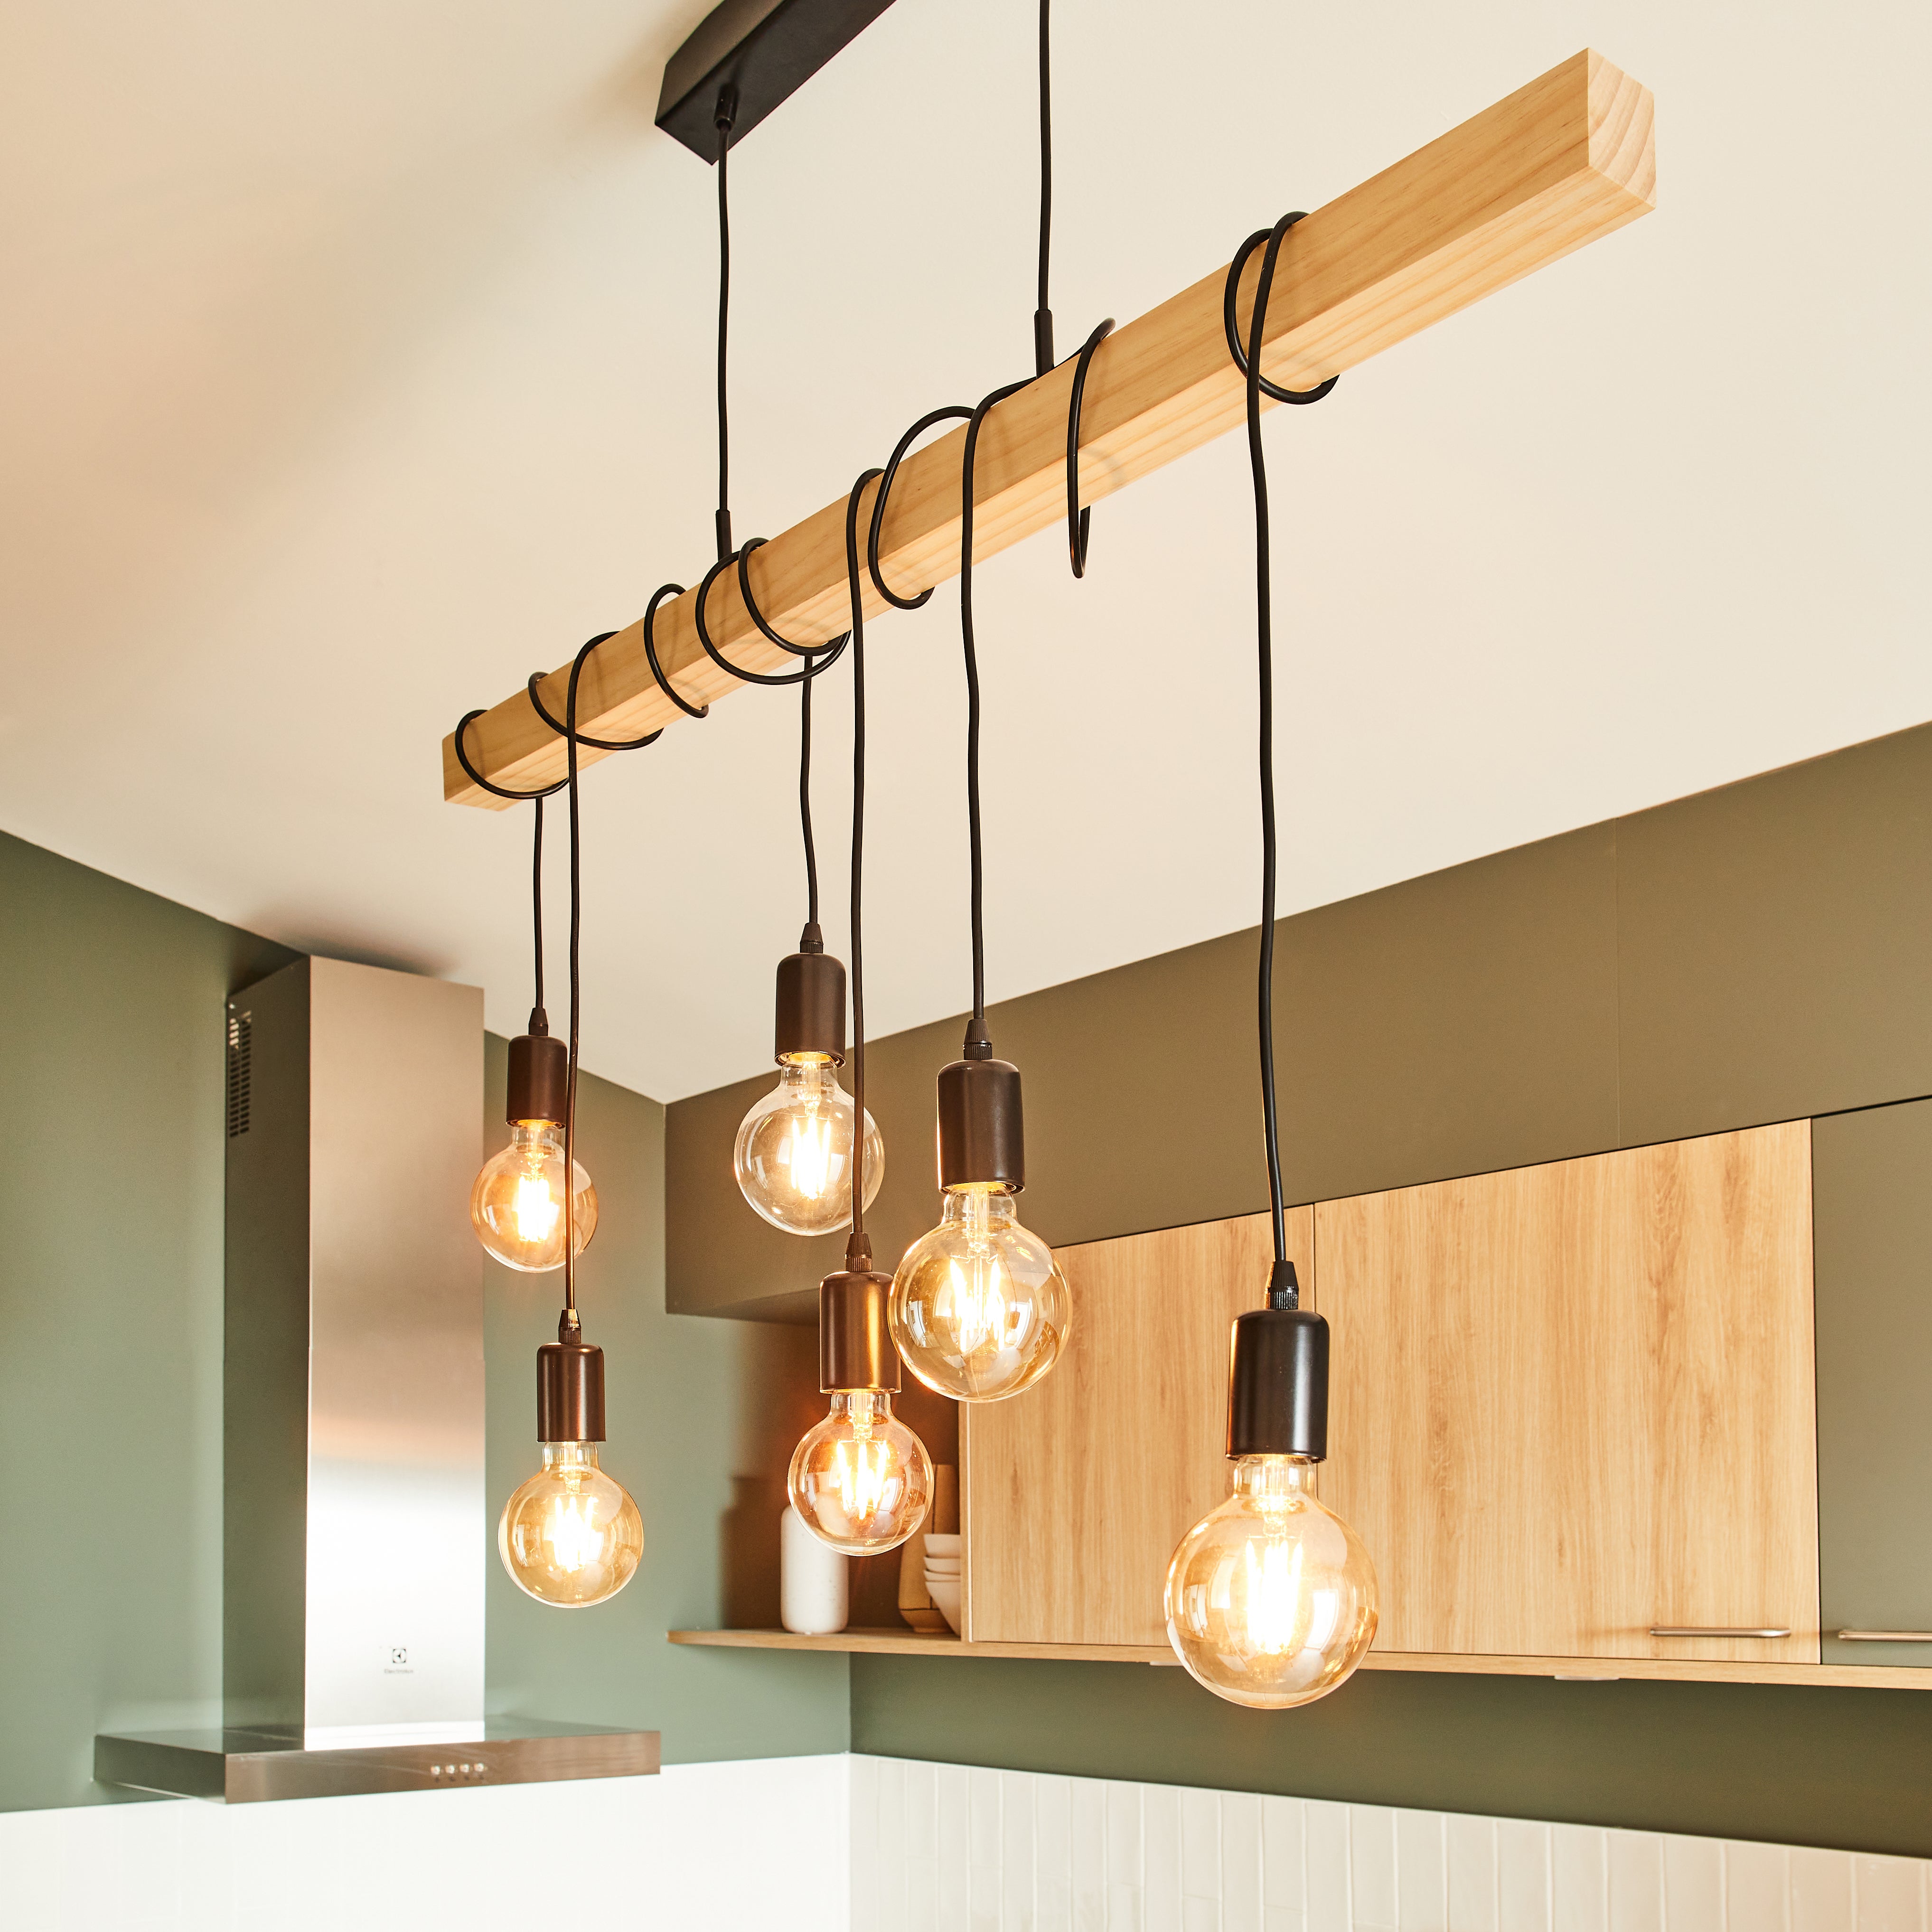 Ganeed Lampadari moderni, lampada a sospensione in metallo, lampada a  sospensione dimmerabile per isola cucina, sala